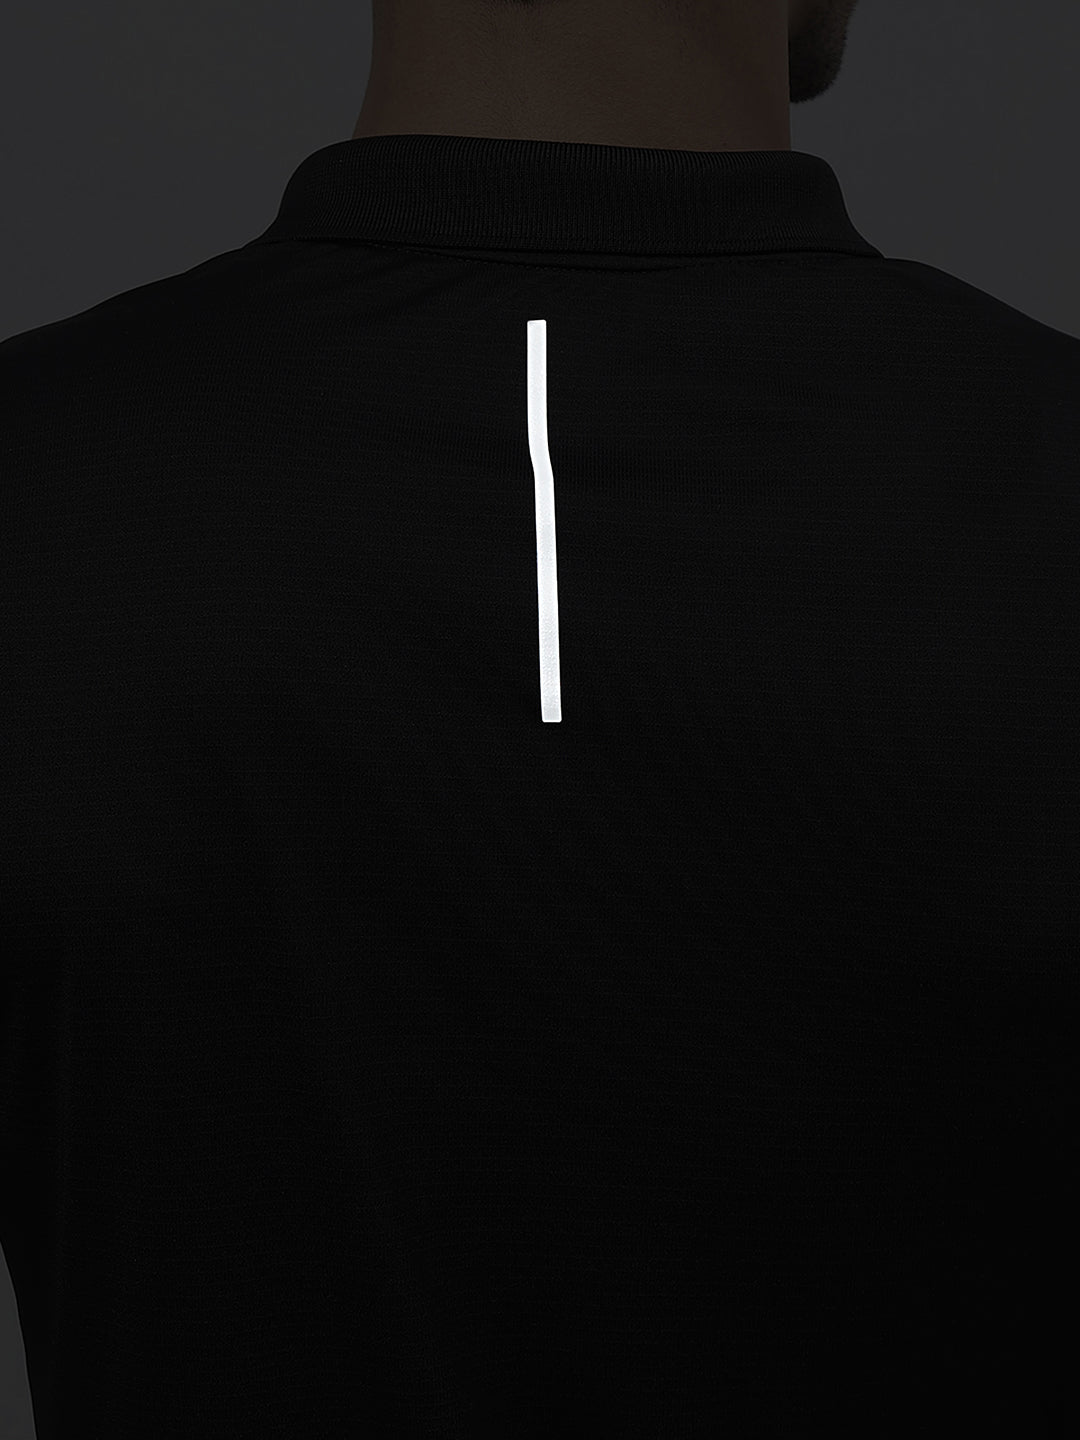 Alcis Men Black Drytech+ Anti-Static Slim-Fit Running Polo T-Shirt